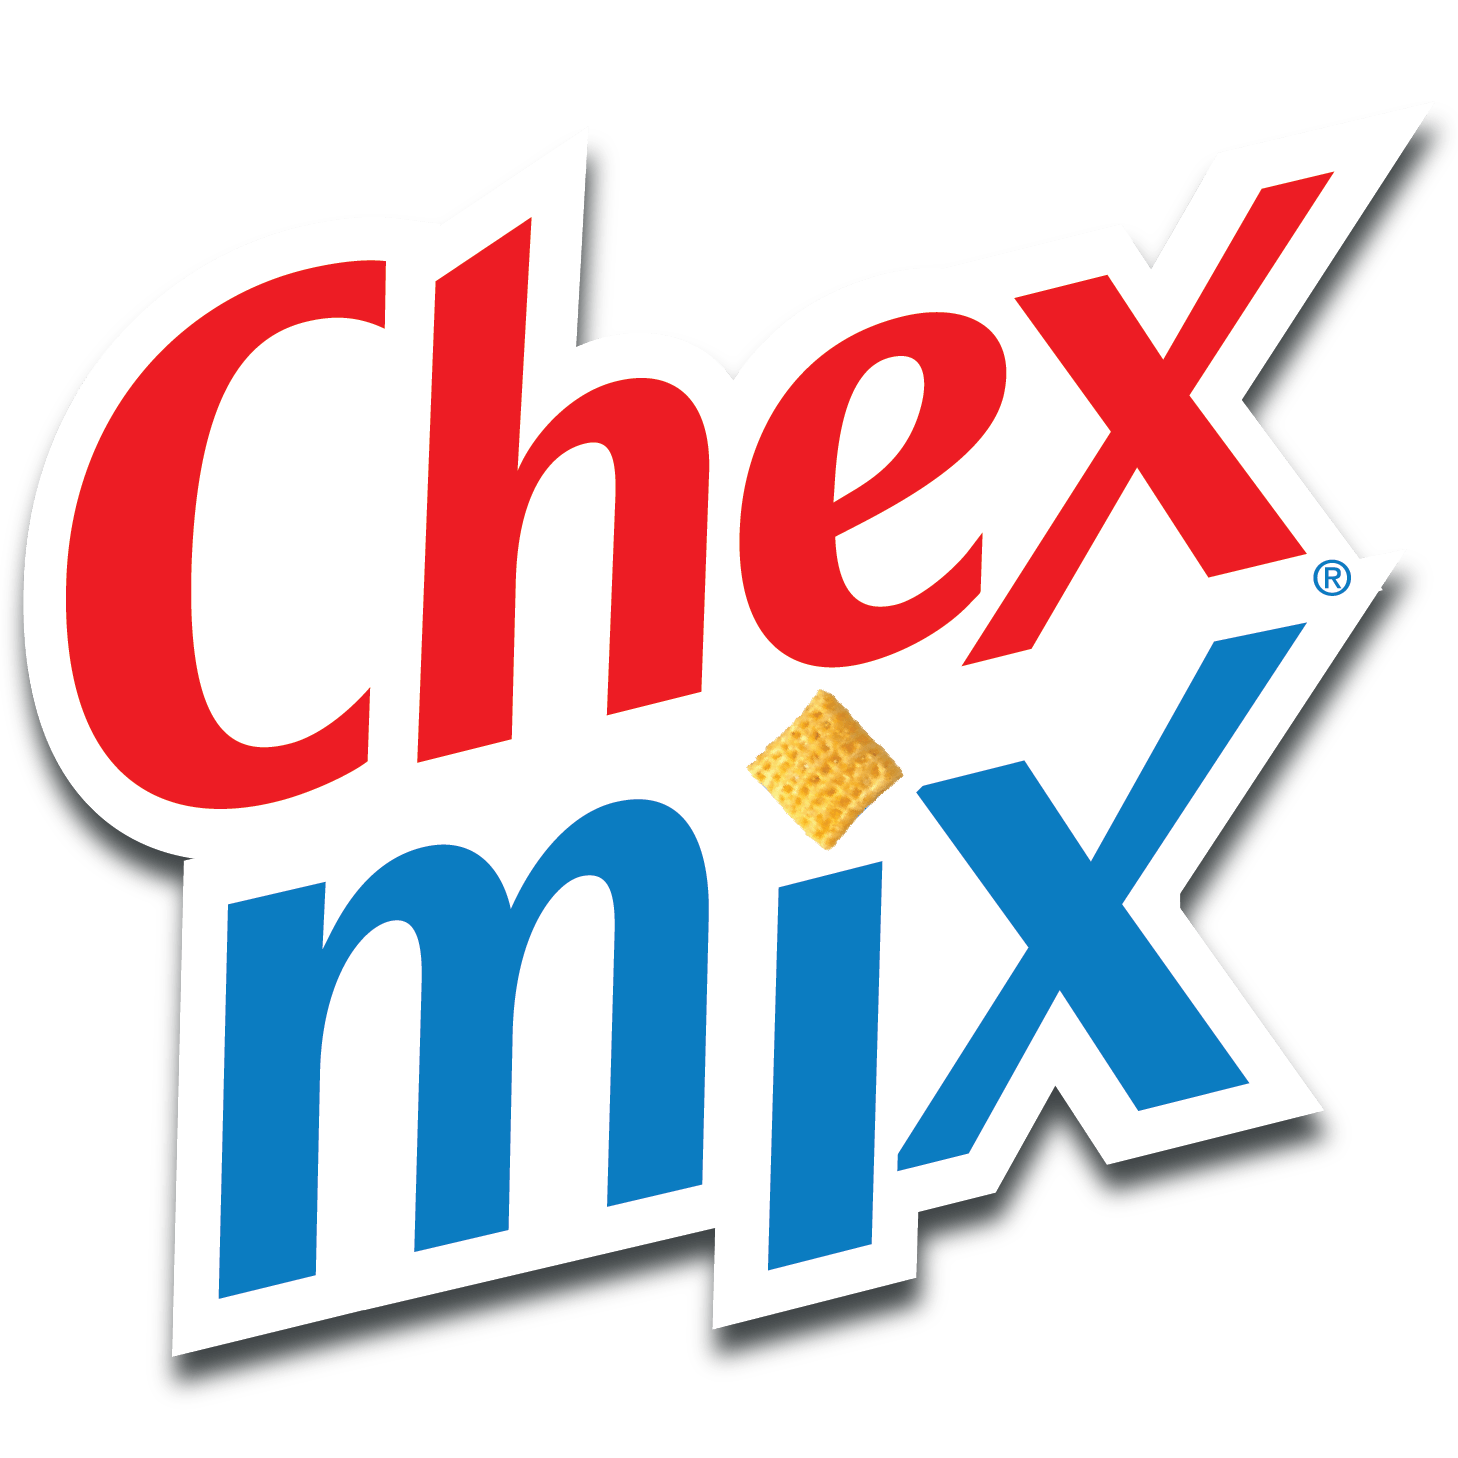 Chex Logo - Chex Mix